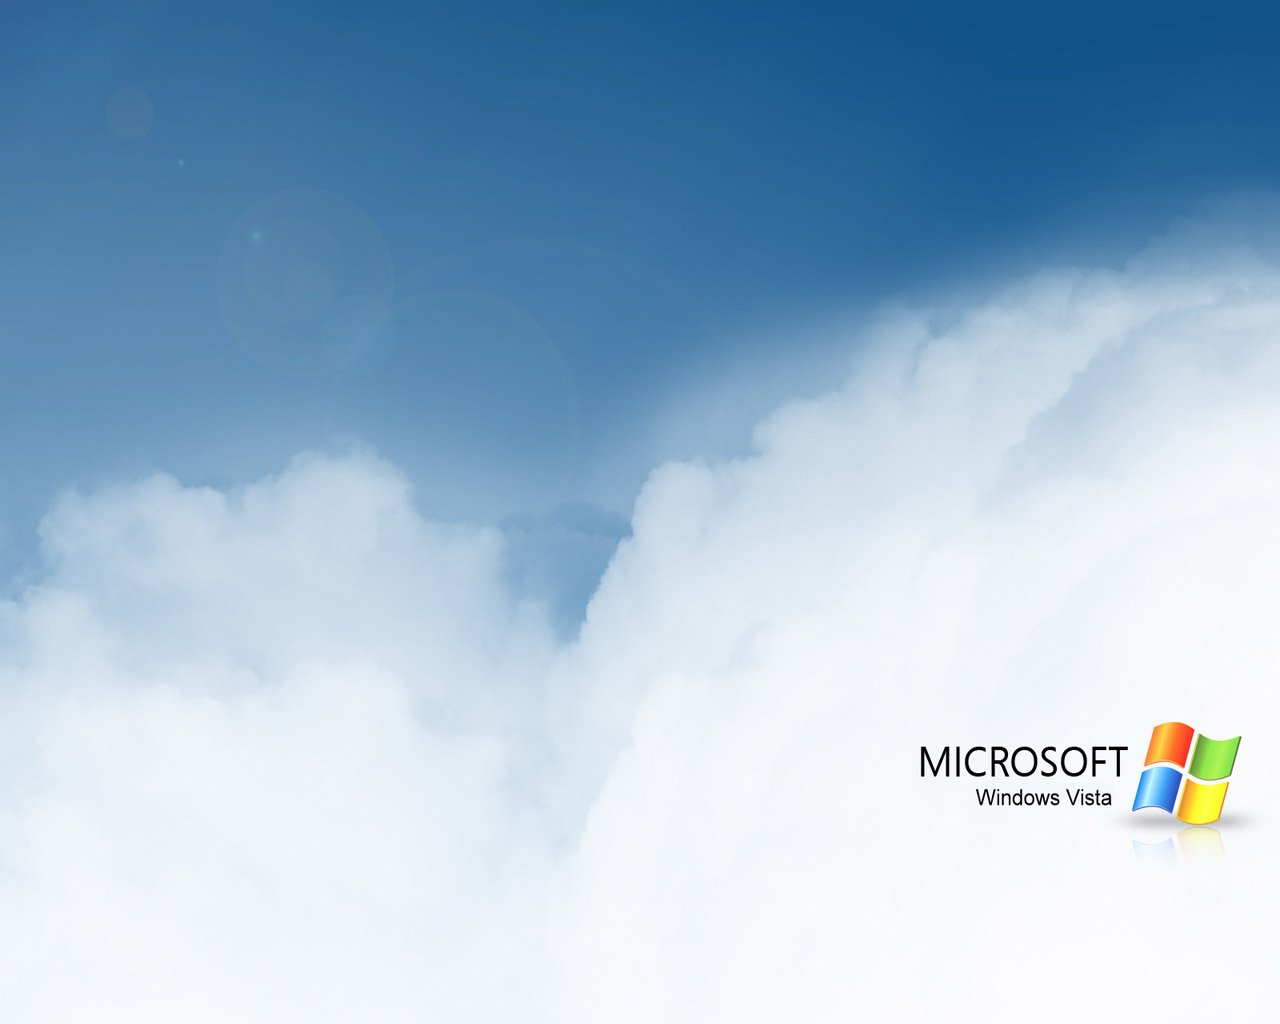  Microsoft Desktop Wallpapers Cloudy Microsoft Desktop Backgrounds 1280x1024